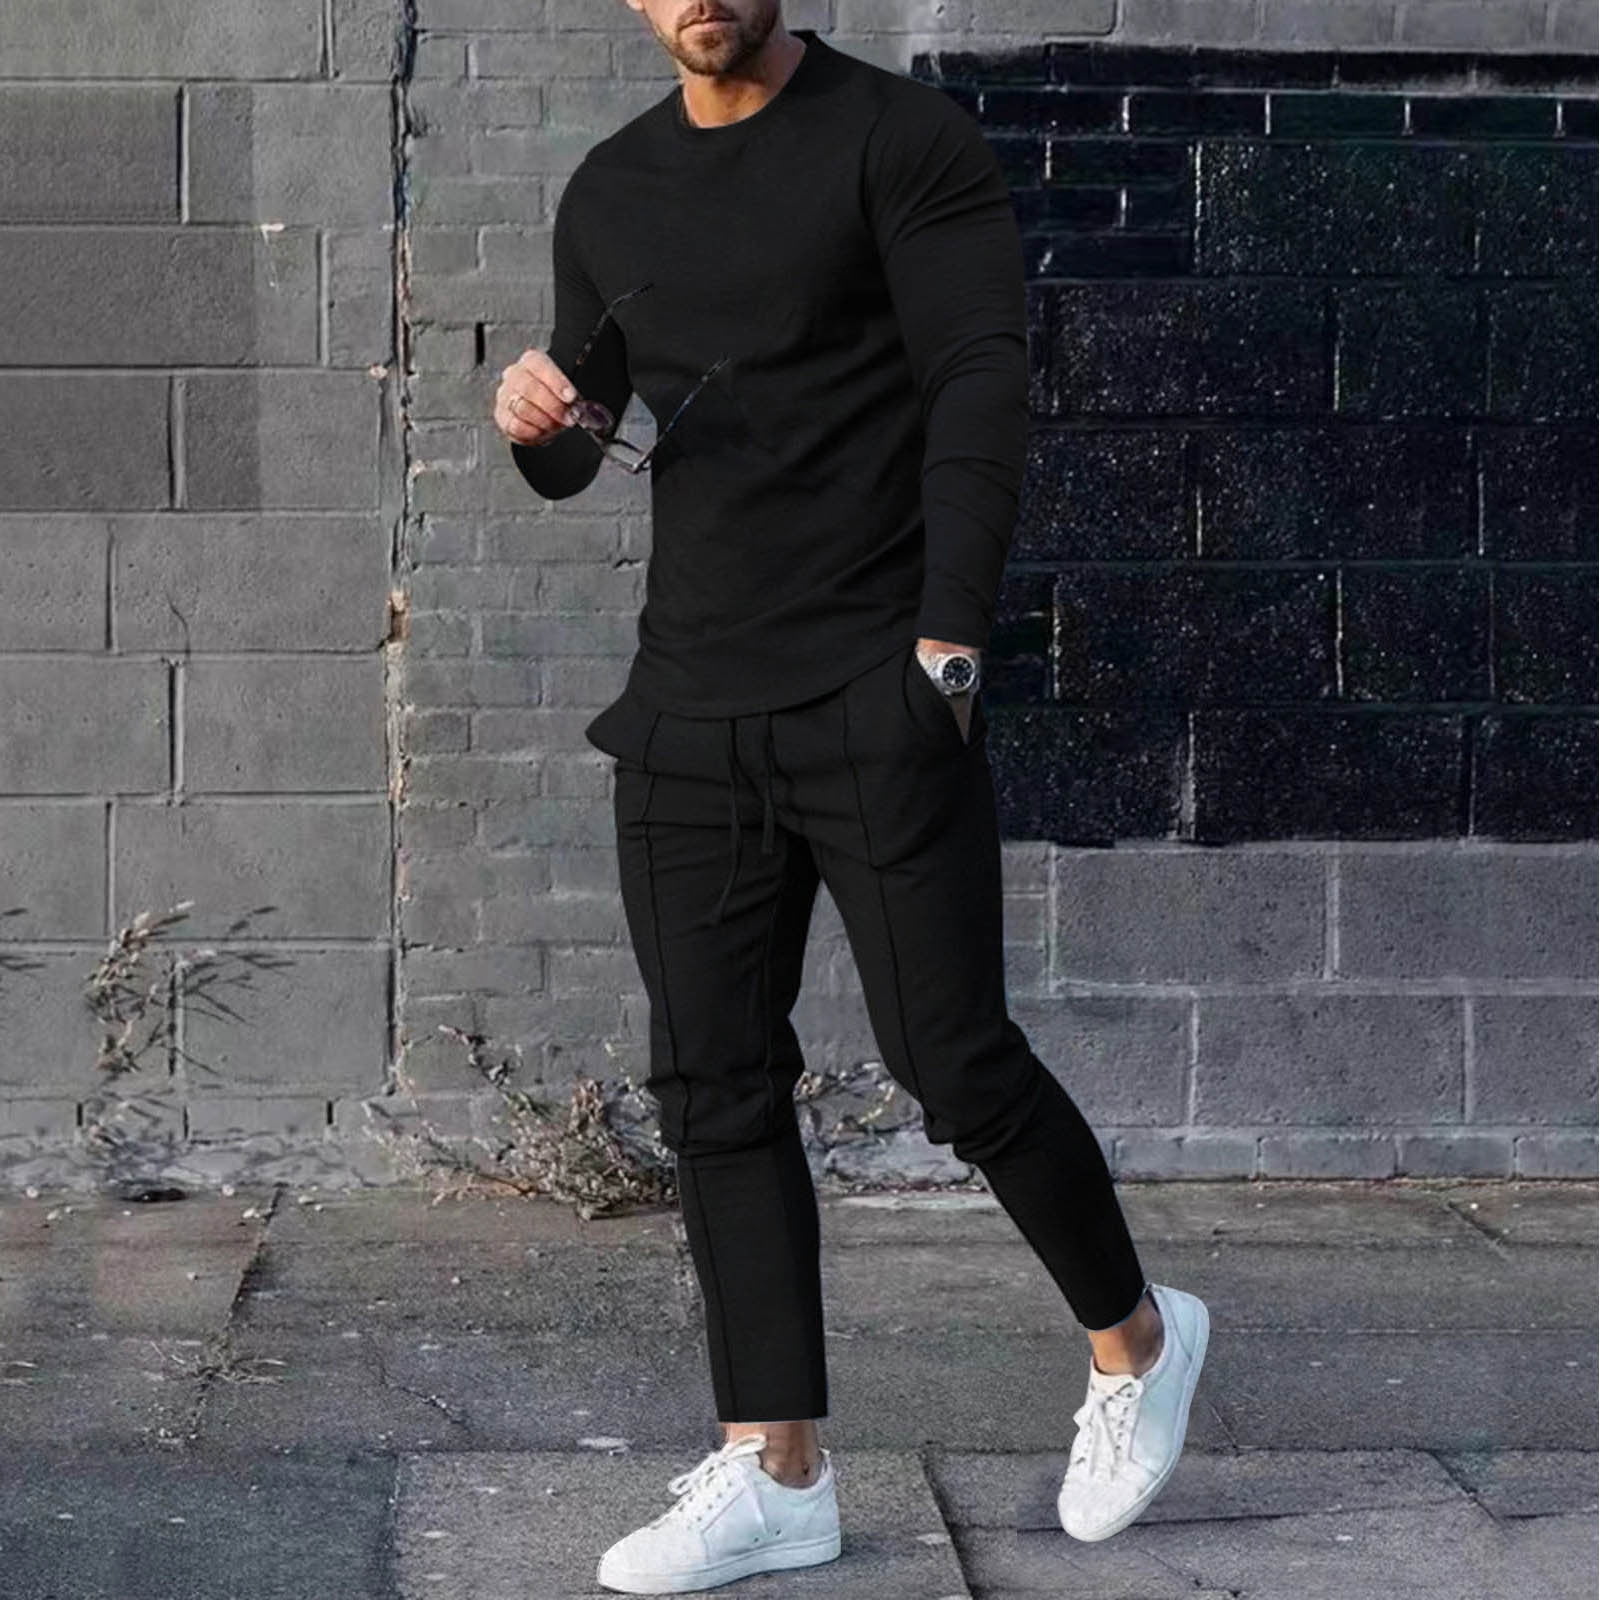 Black Sweatpants Outfit, Black Track Pants Outfit